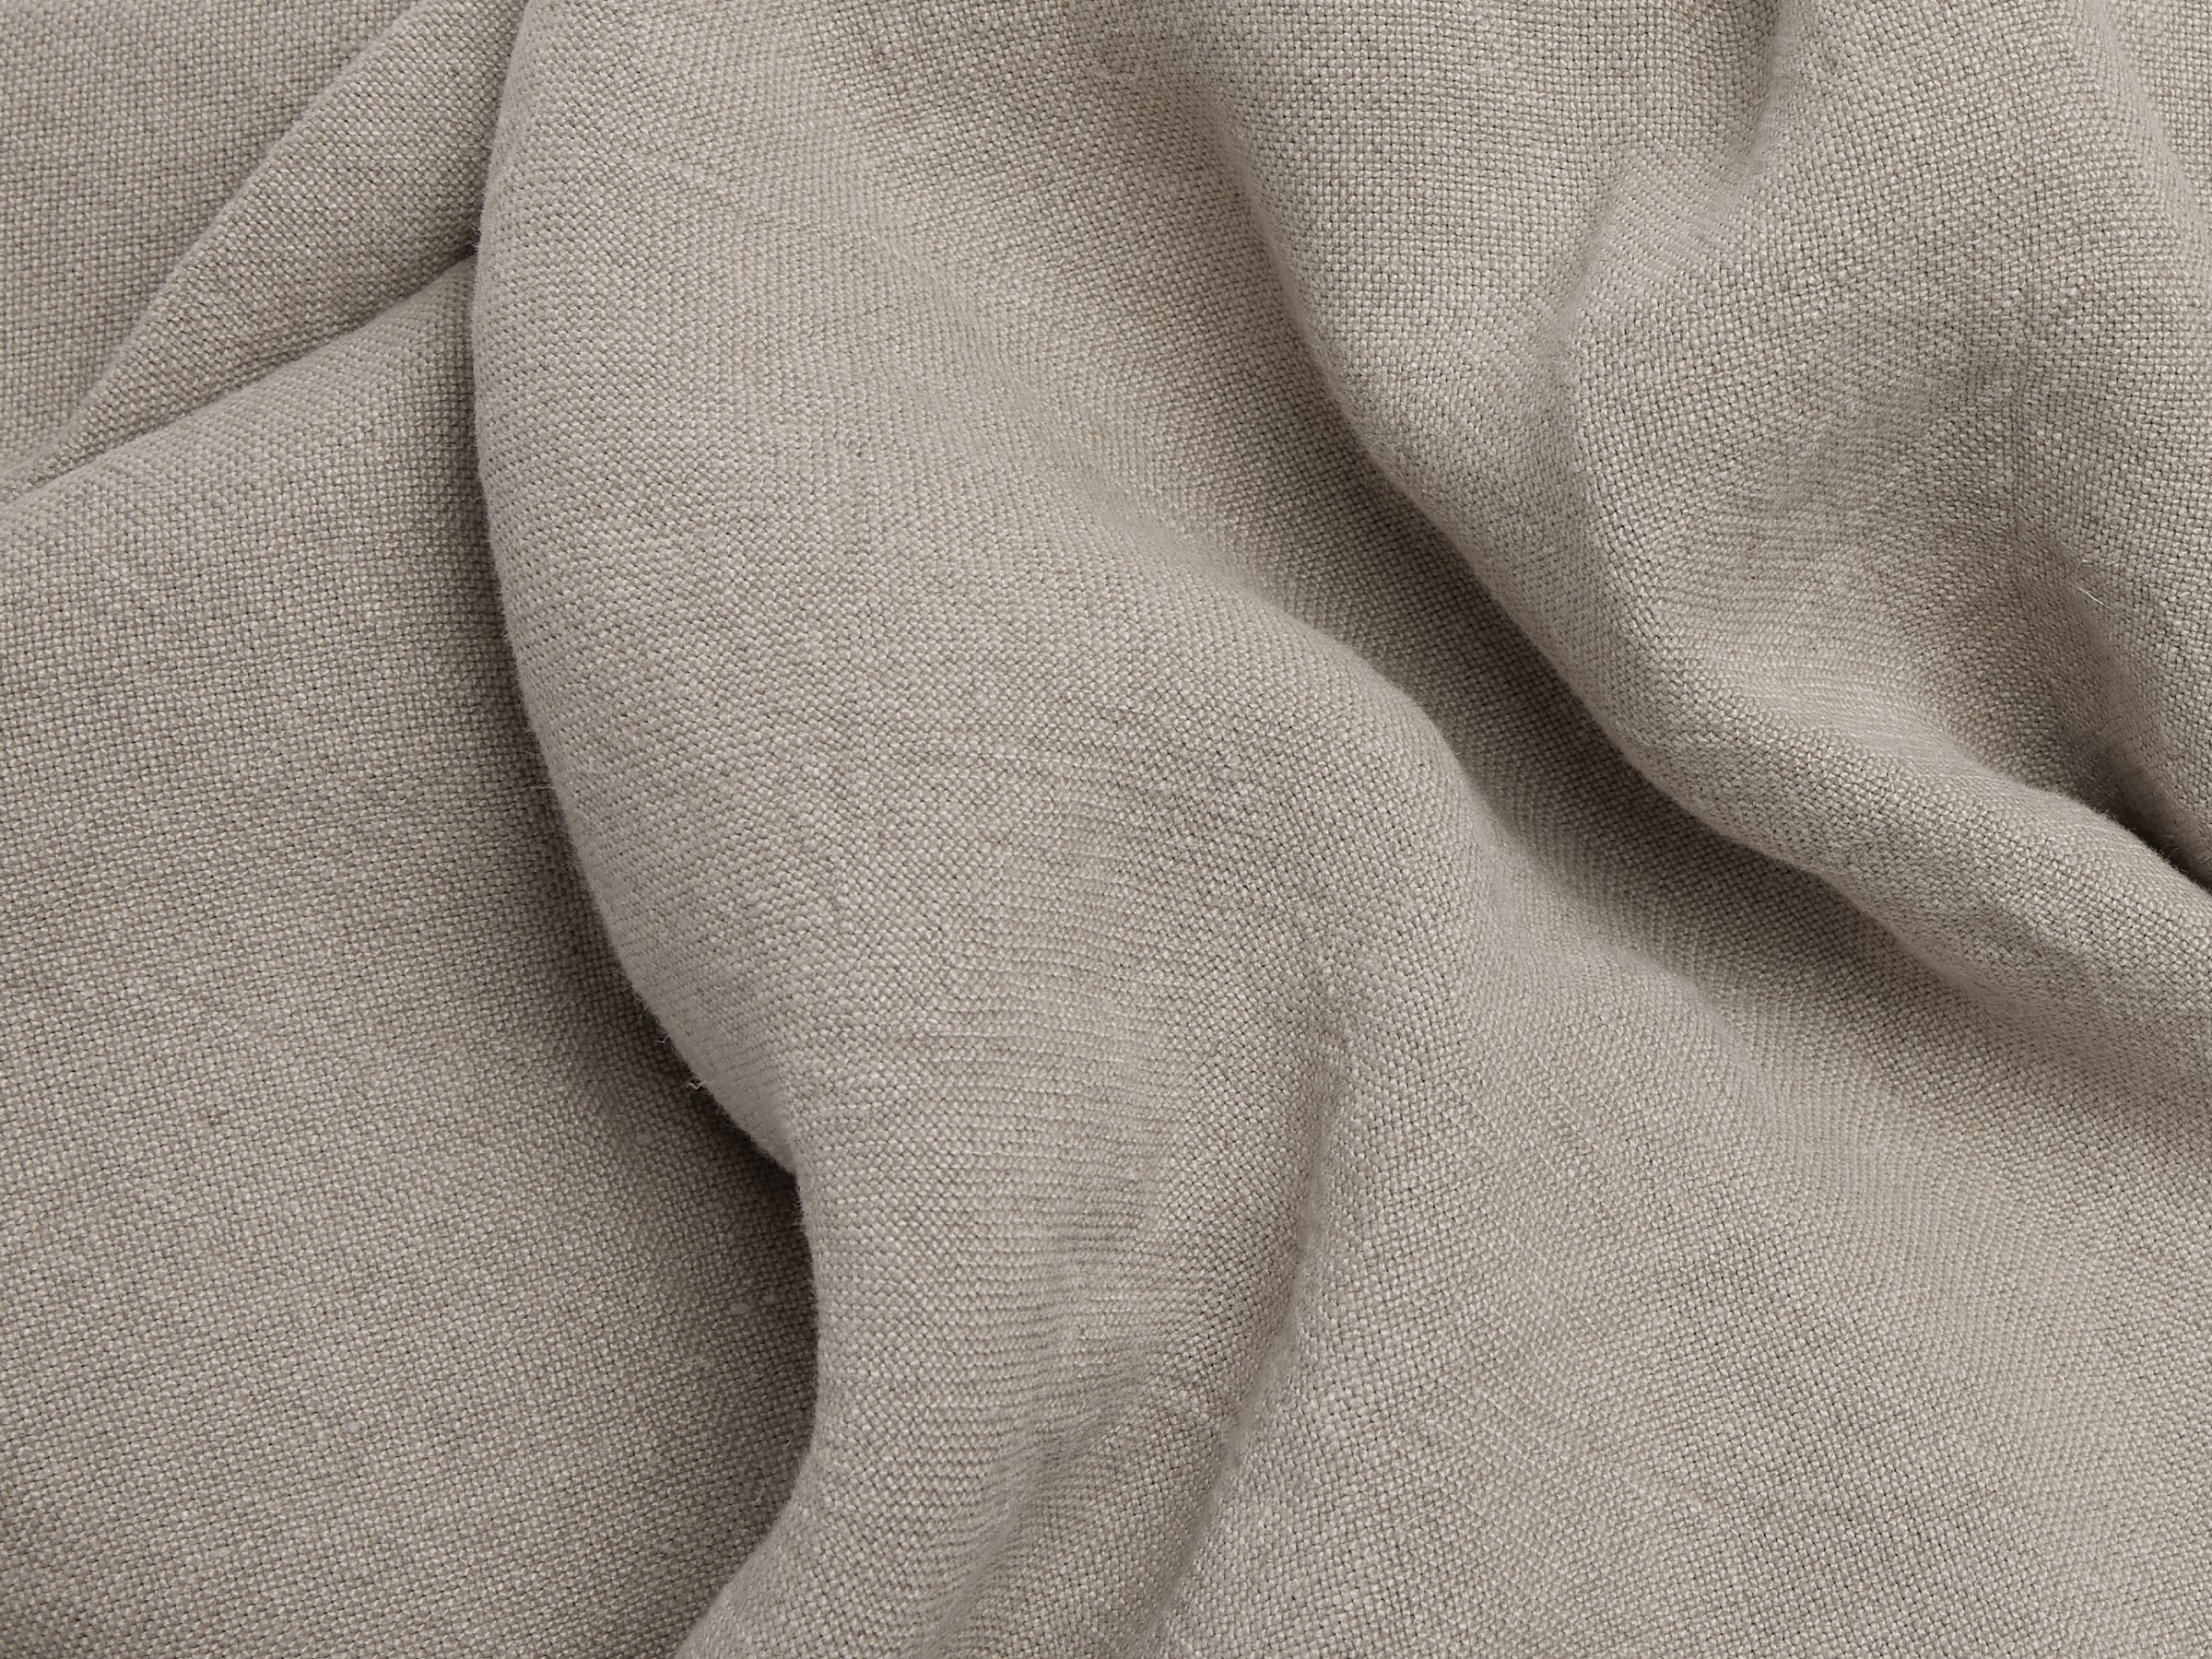 Vintage Linen Bed Cover - Image 1